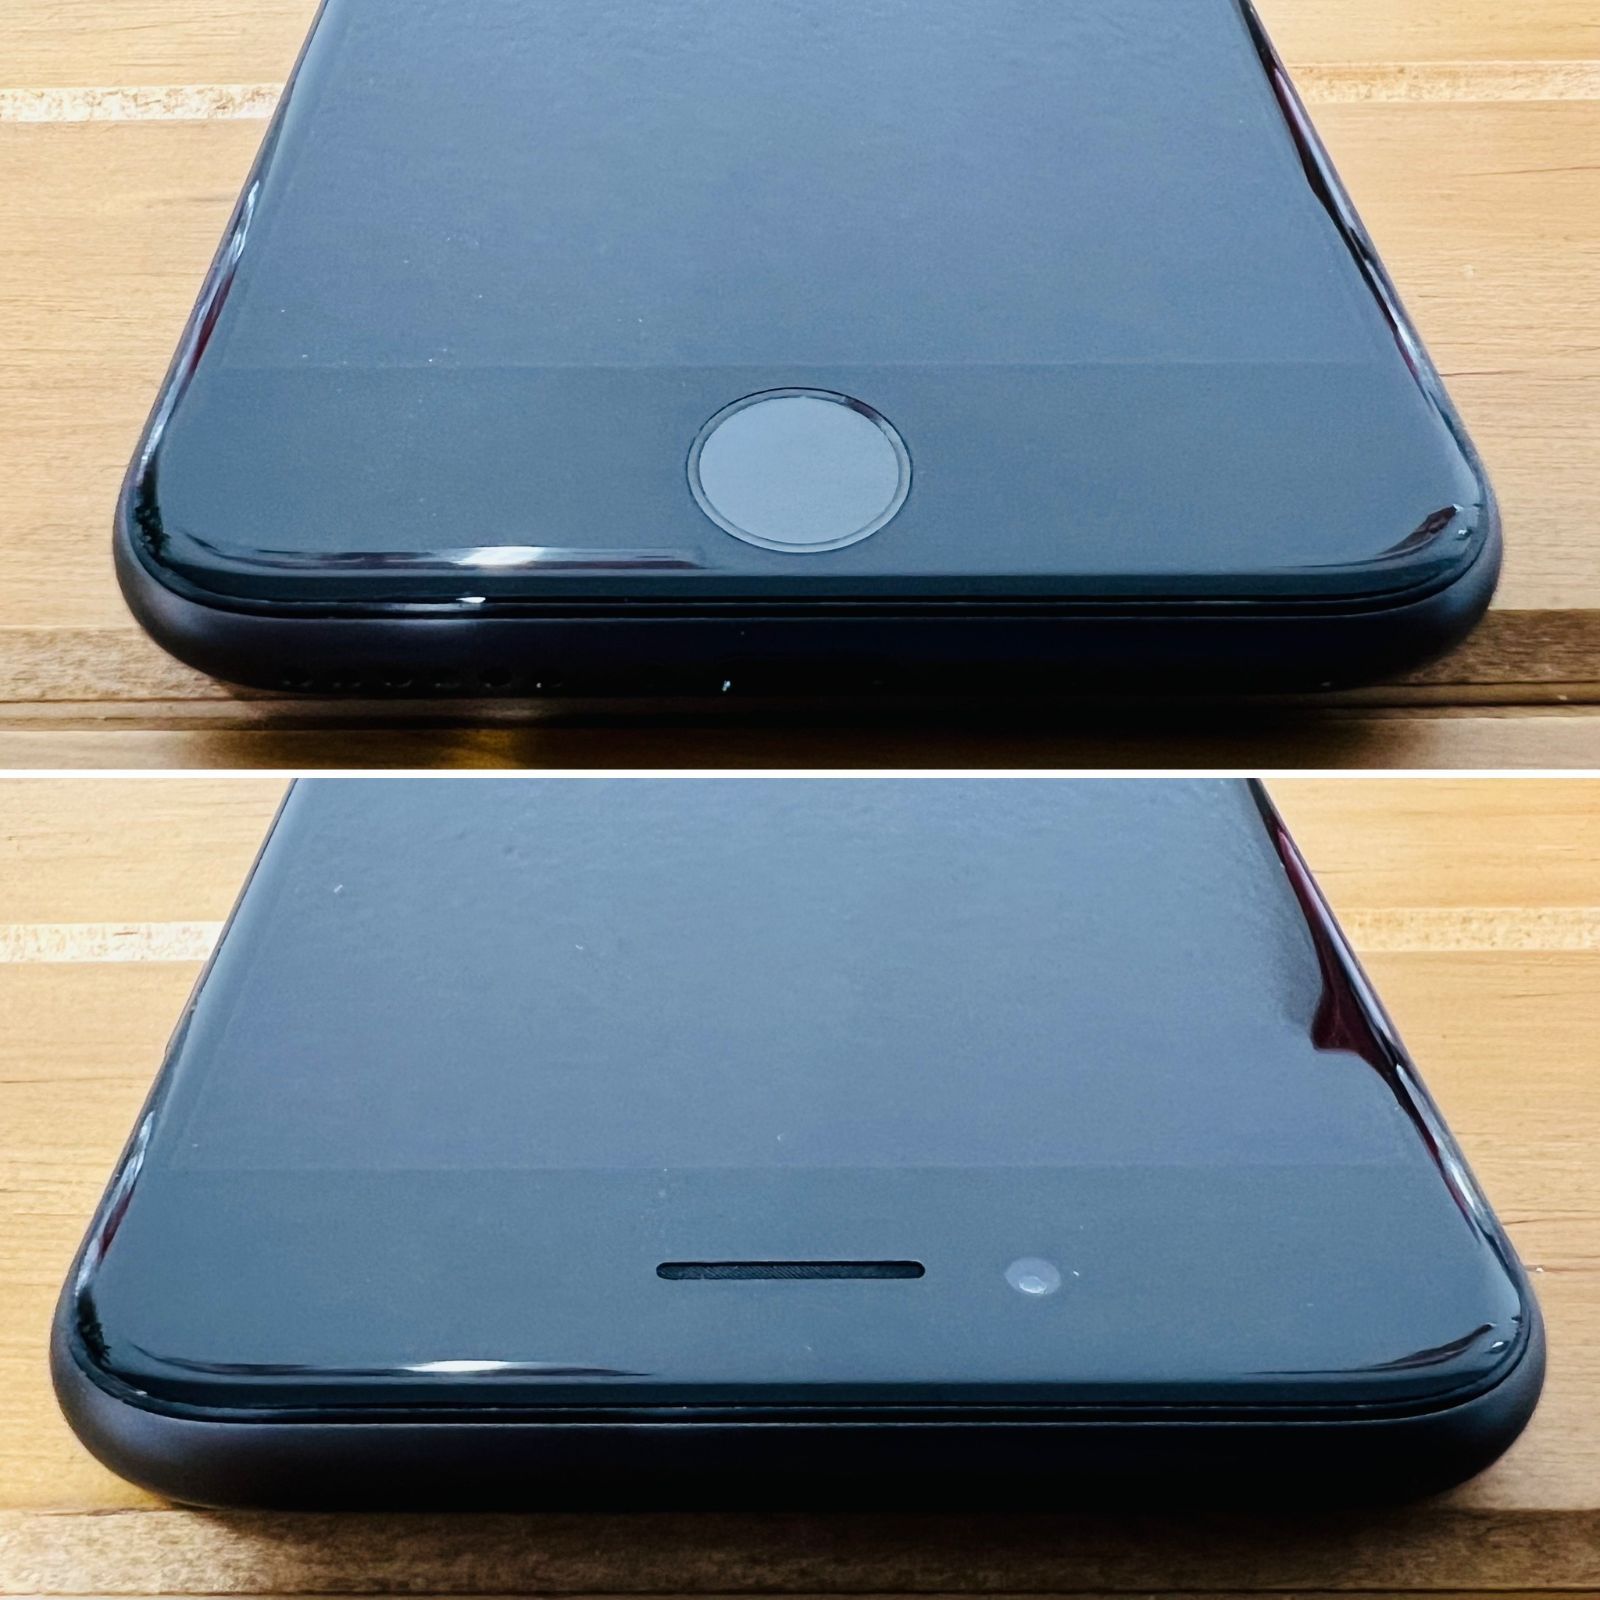 【simロック解除済】iPhone8 本体 64GB 大容量 バッテリー 交換済